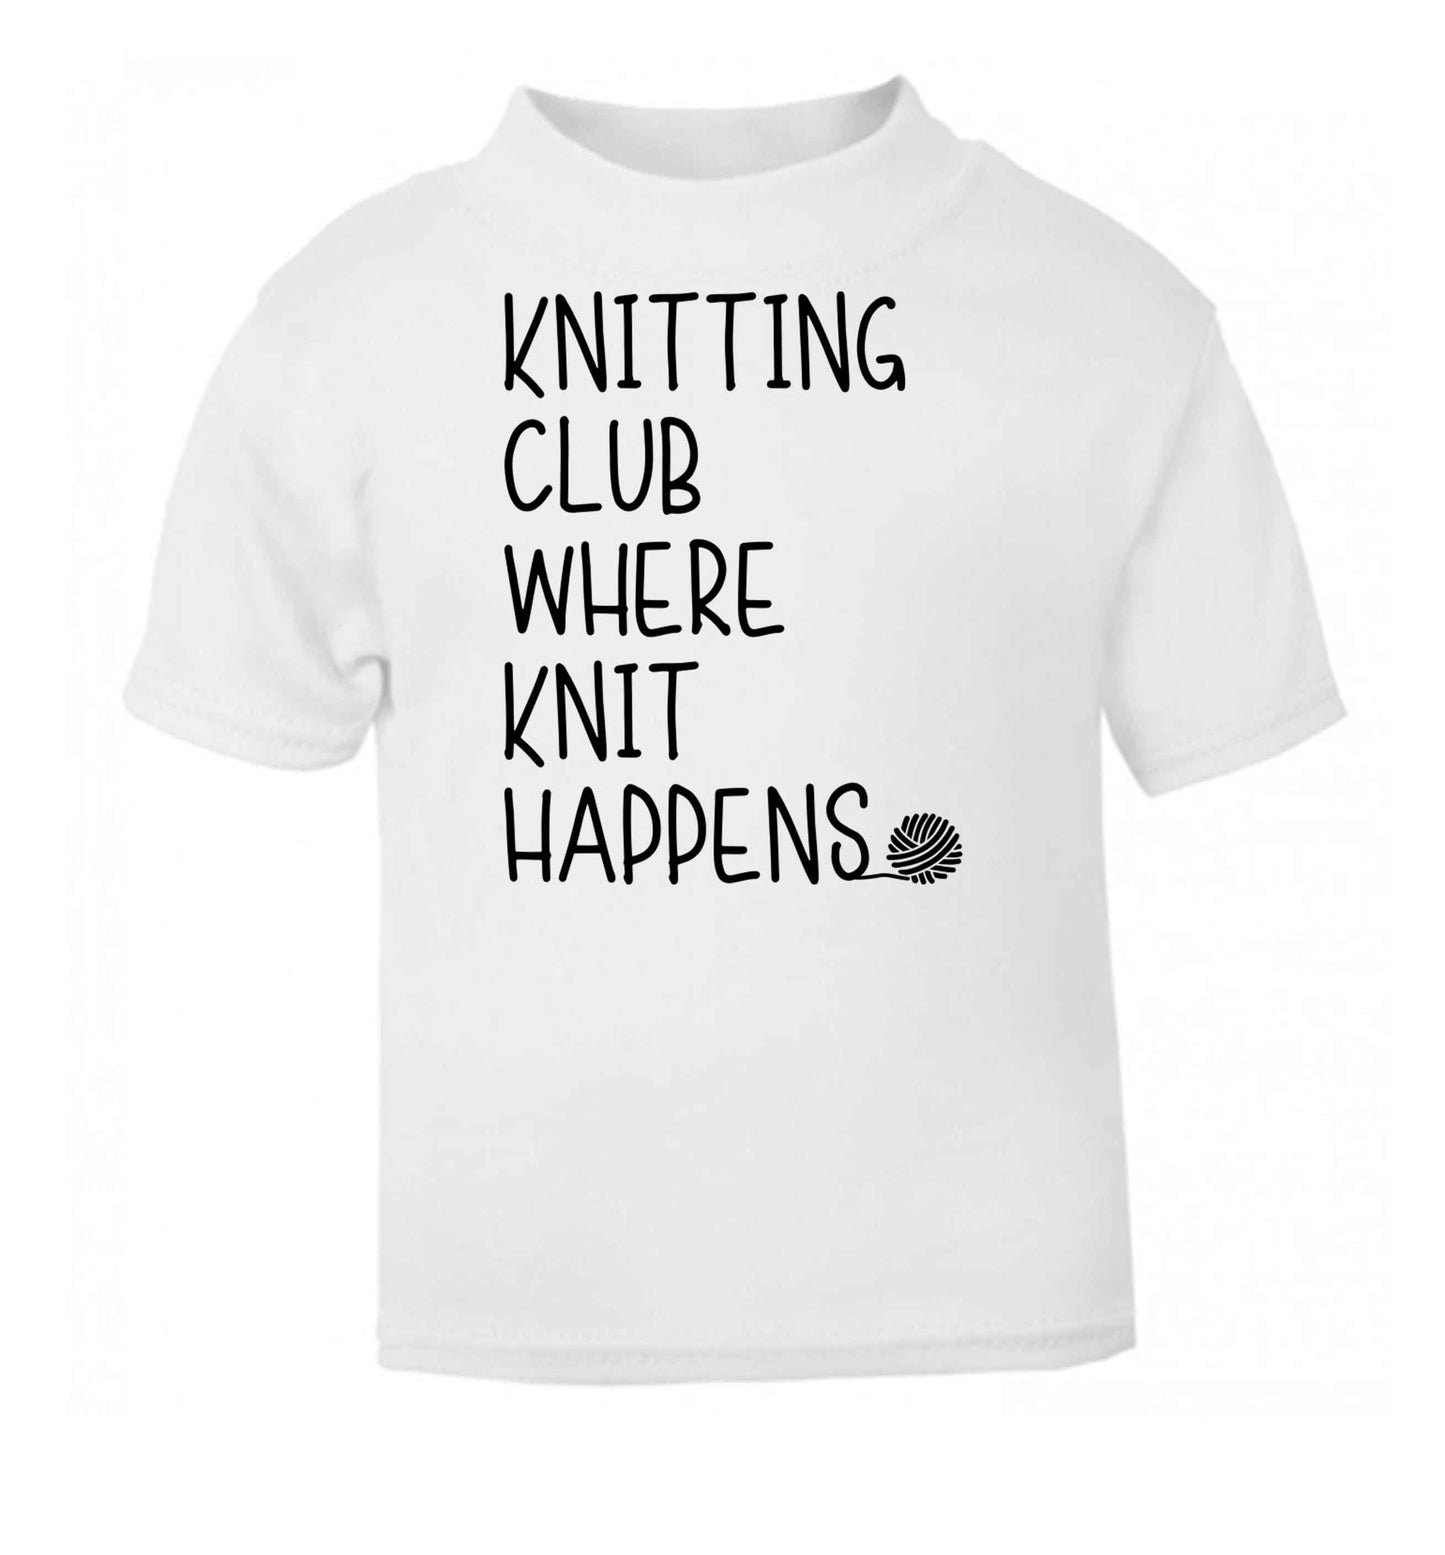 Knitting club where knit happens white baby toddler Tshirt 2 Years